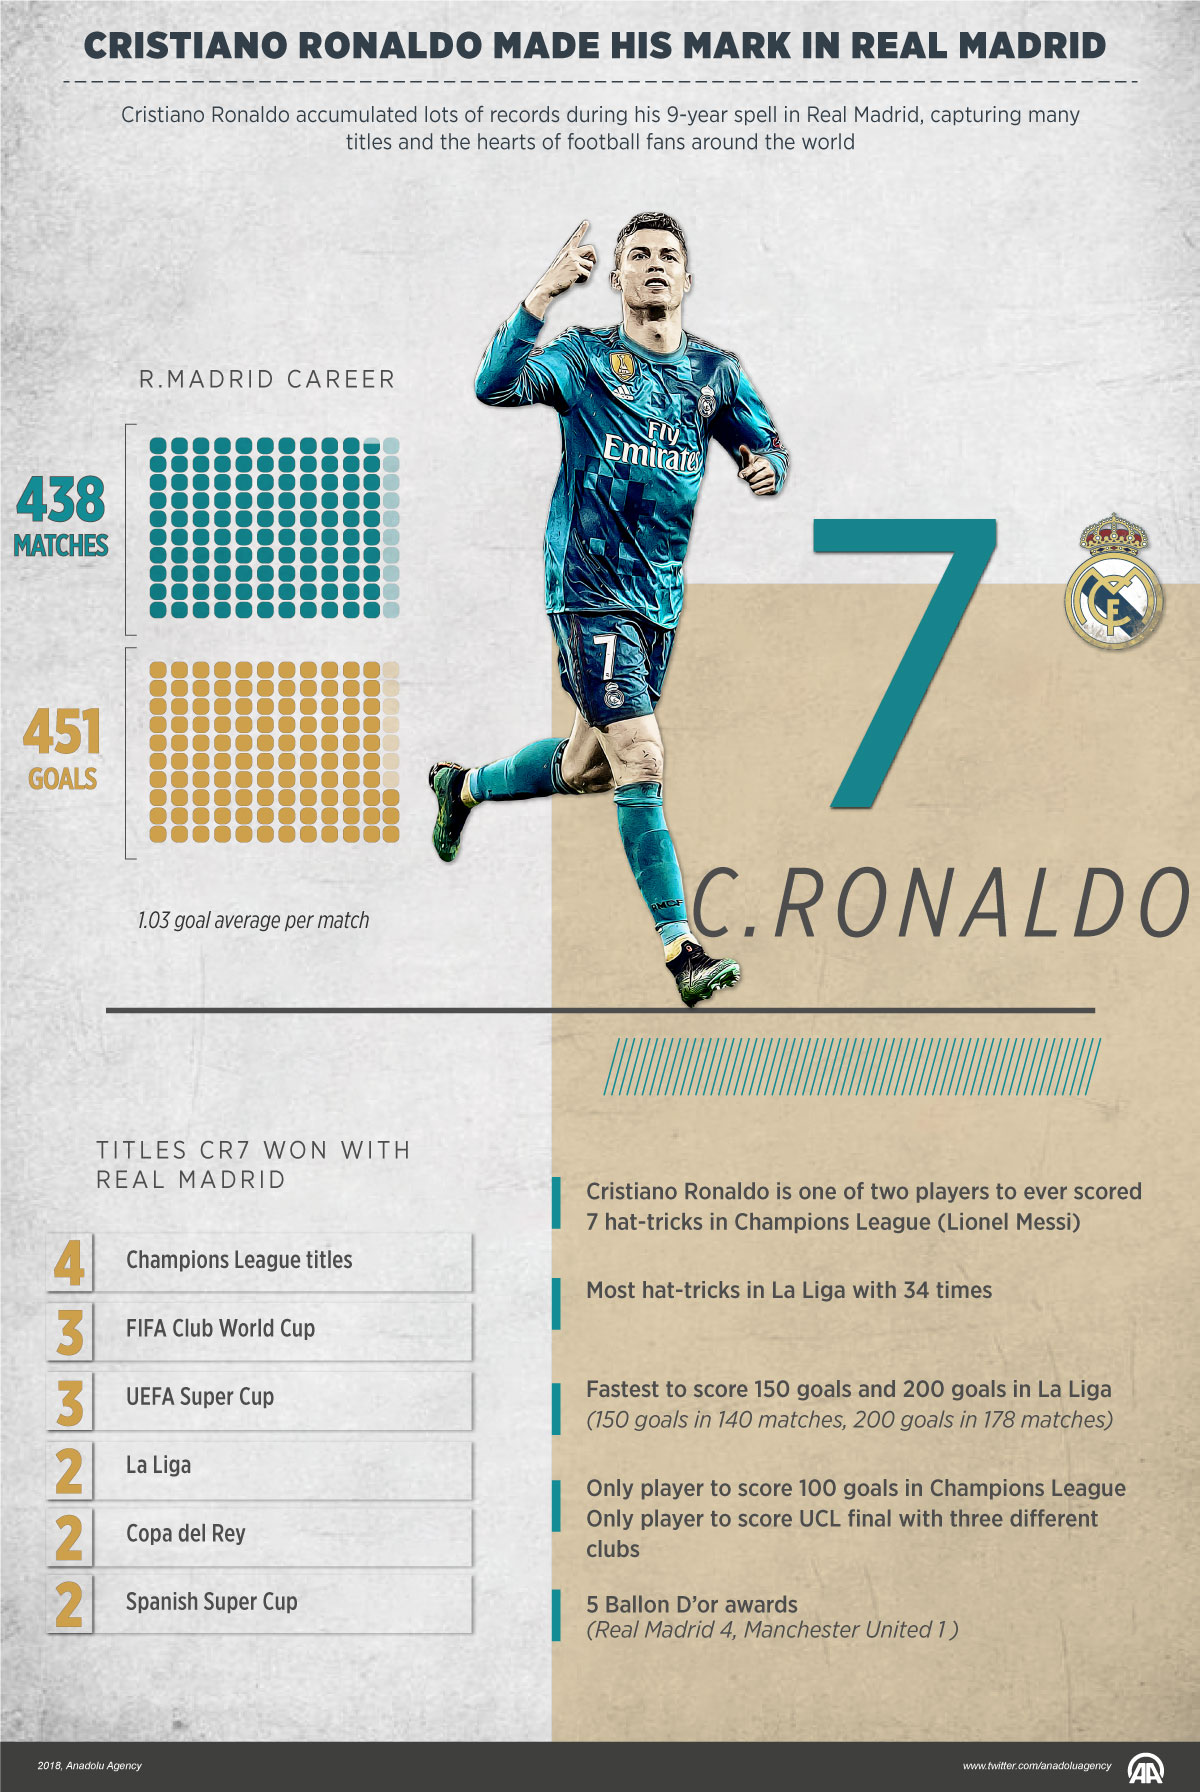 Cristiano Ronaldo made his mark in Real Madrid